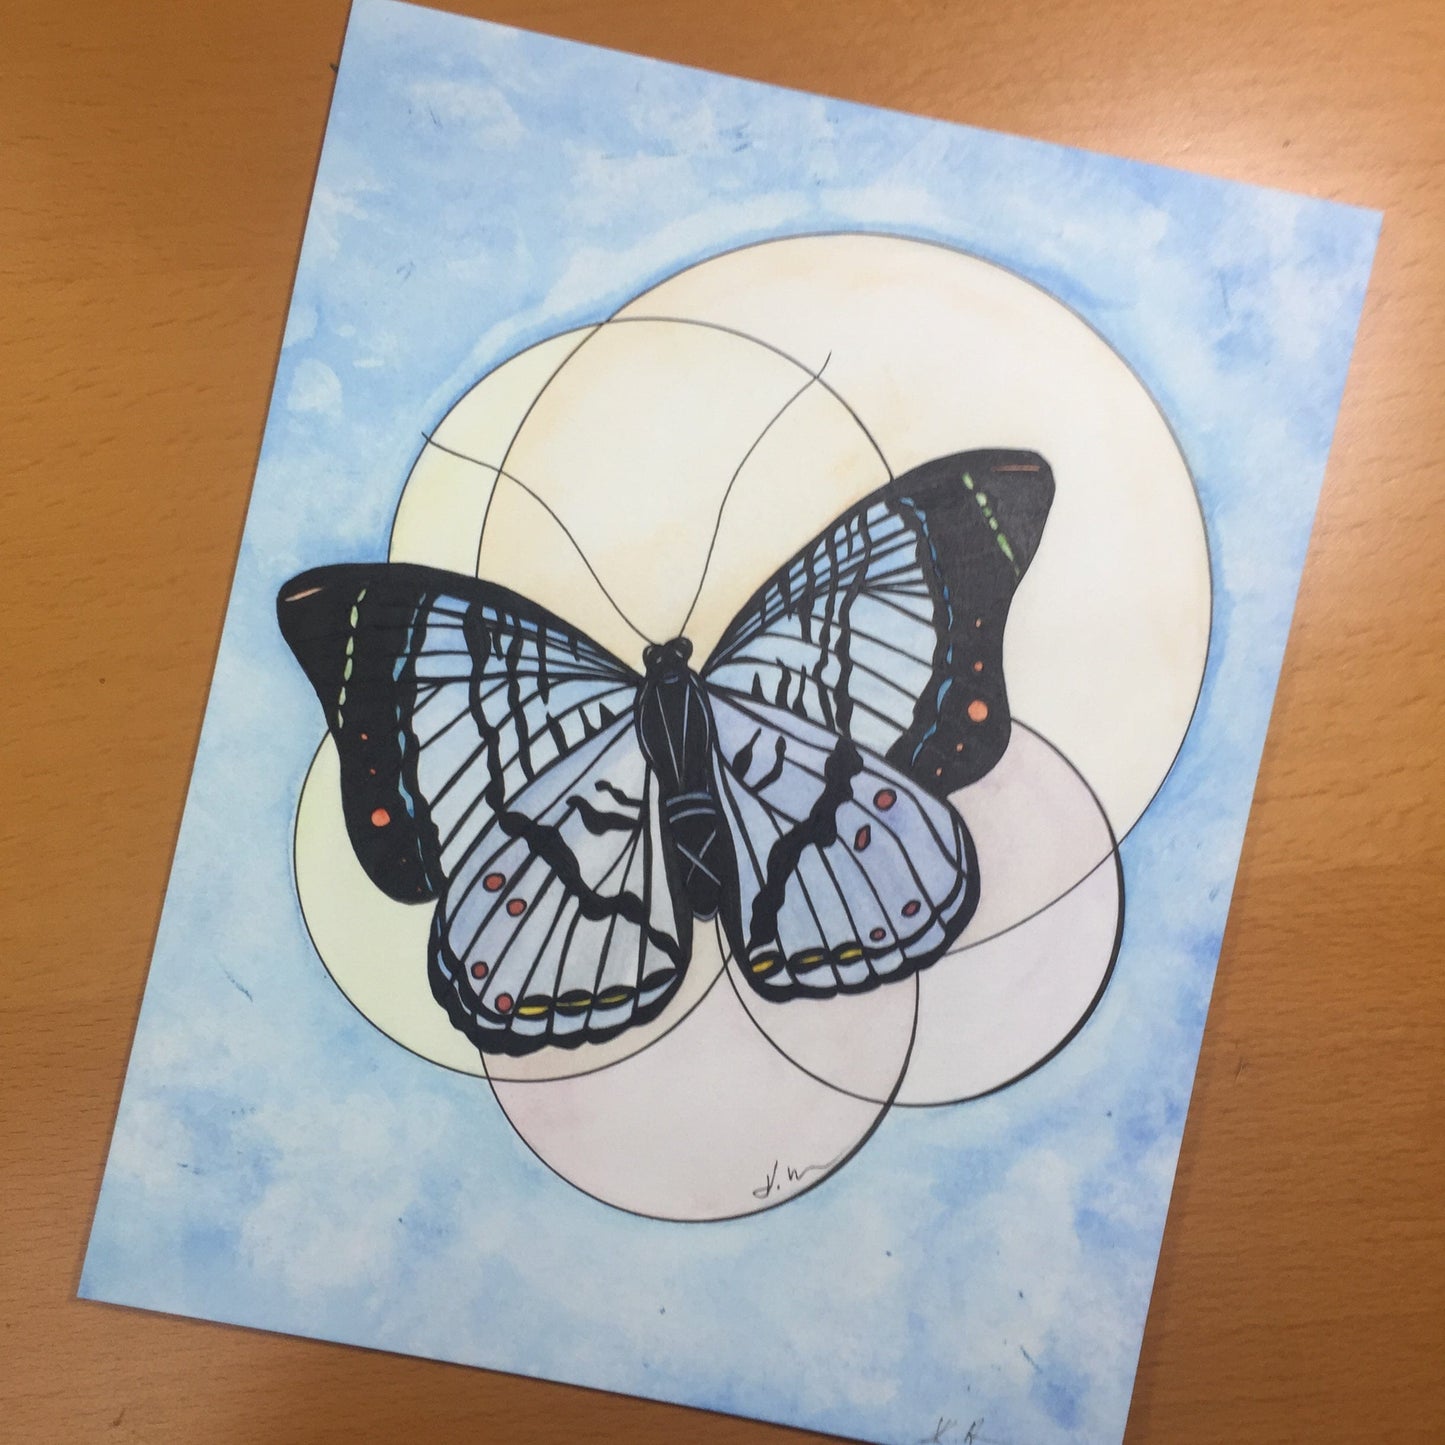 PinkPolish Design Original Art "Brilliance" Butterfly Inspired Original Watercolor & Ink Illustration